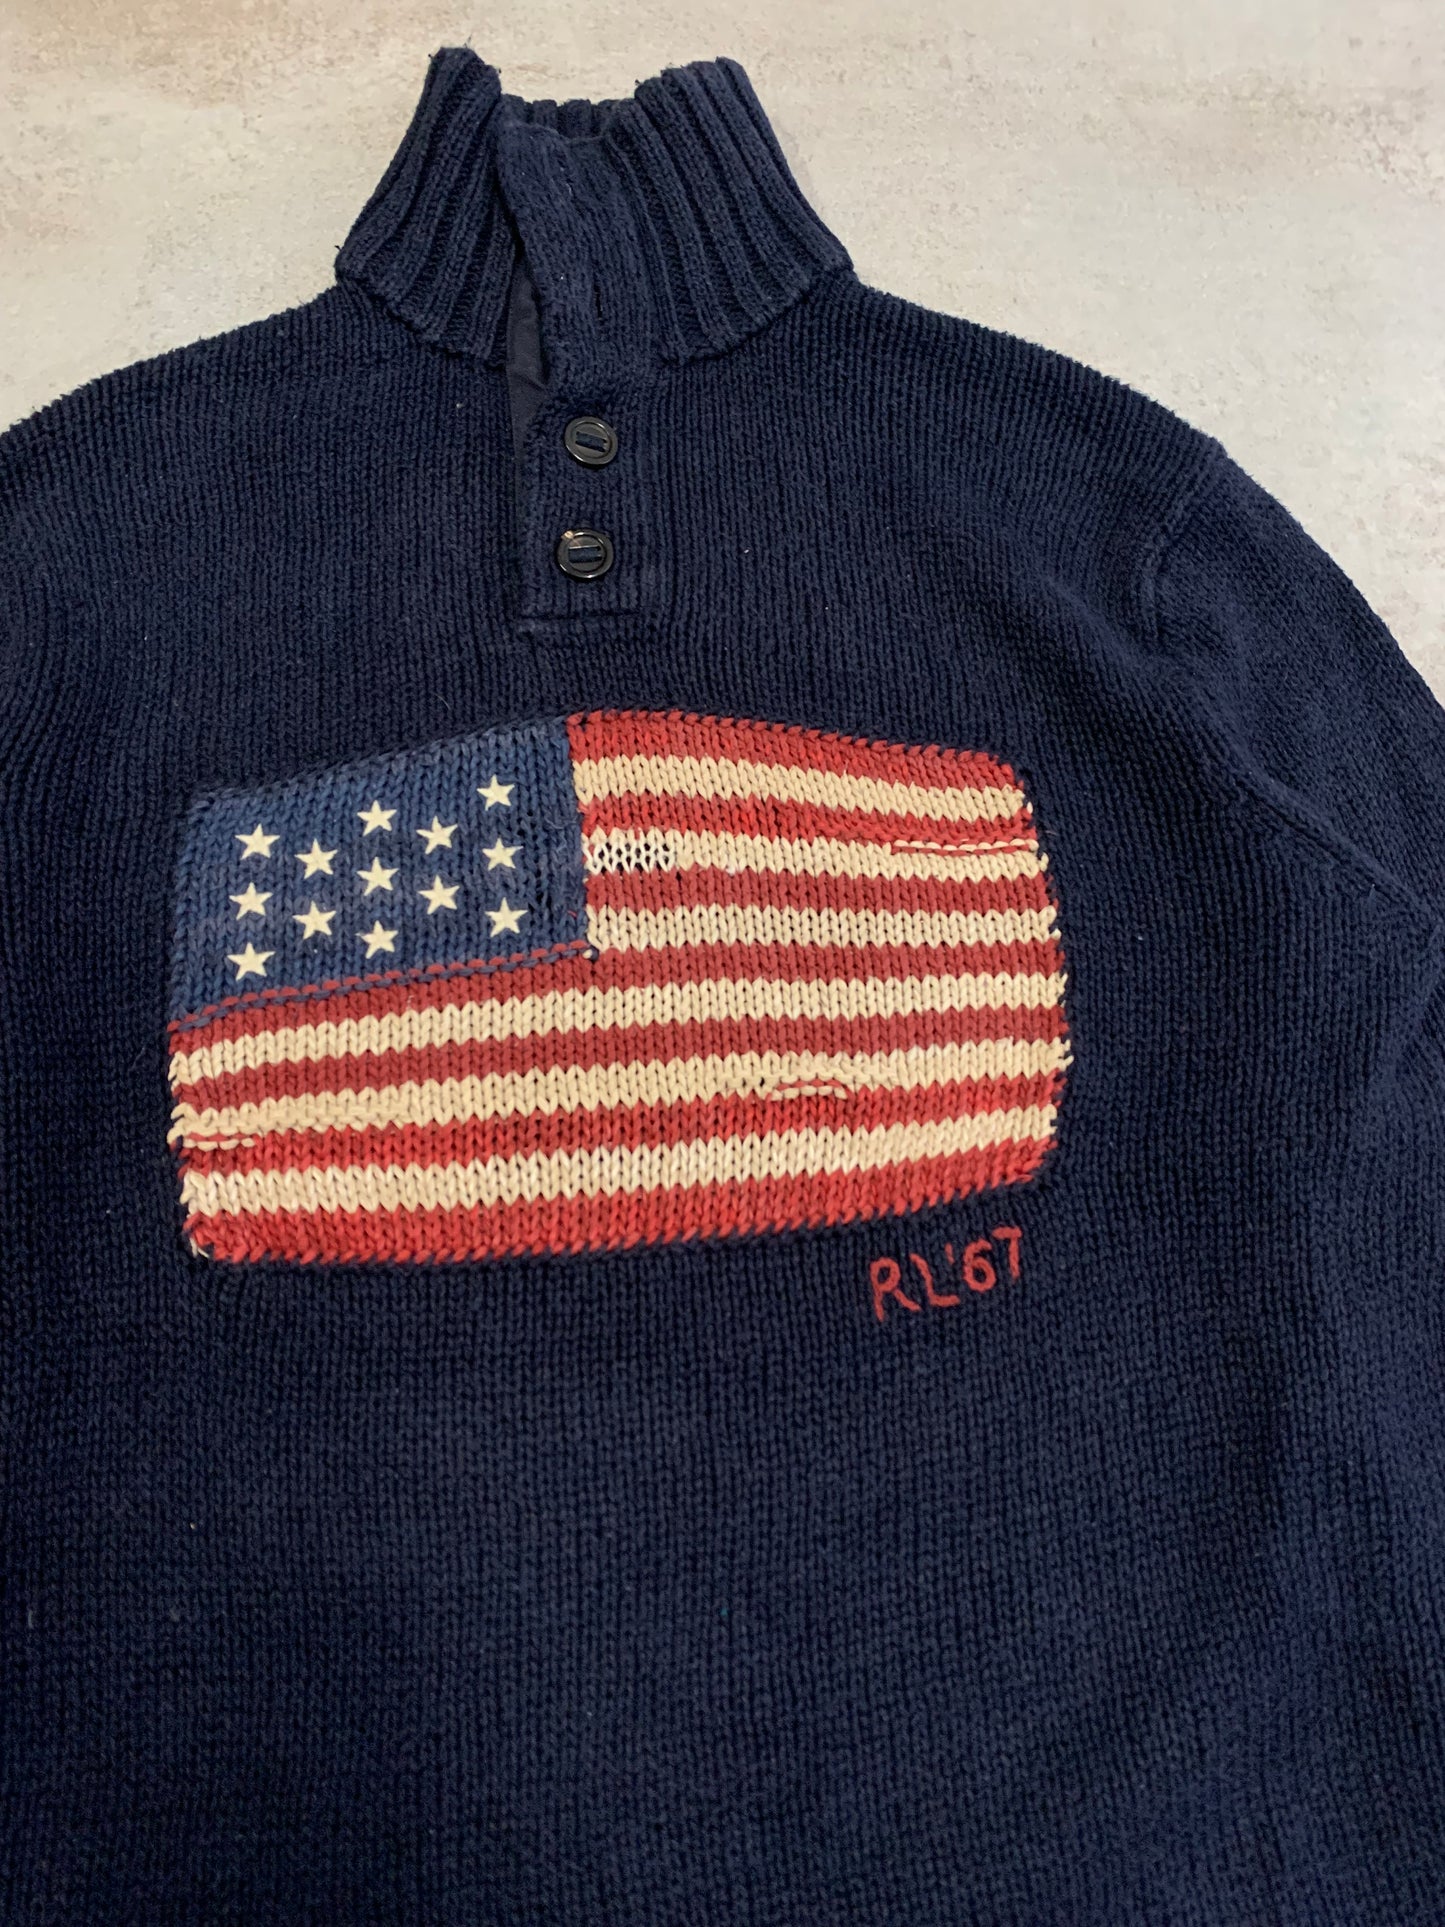 Vintage Polo Ralph Lauren 90's Sweater - S